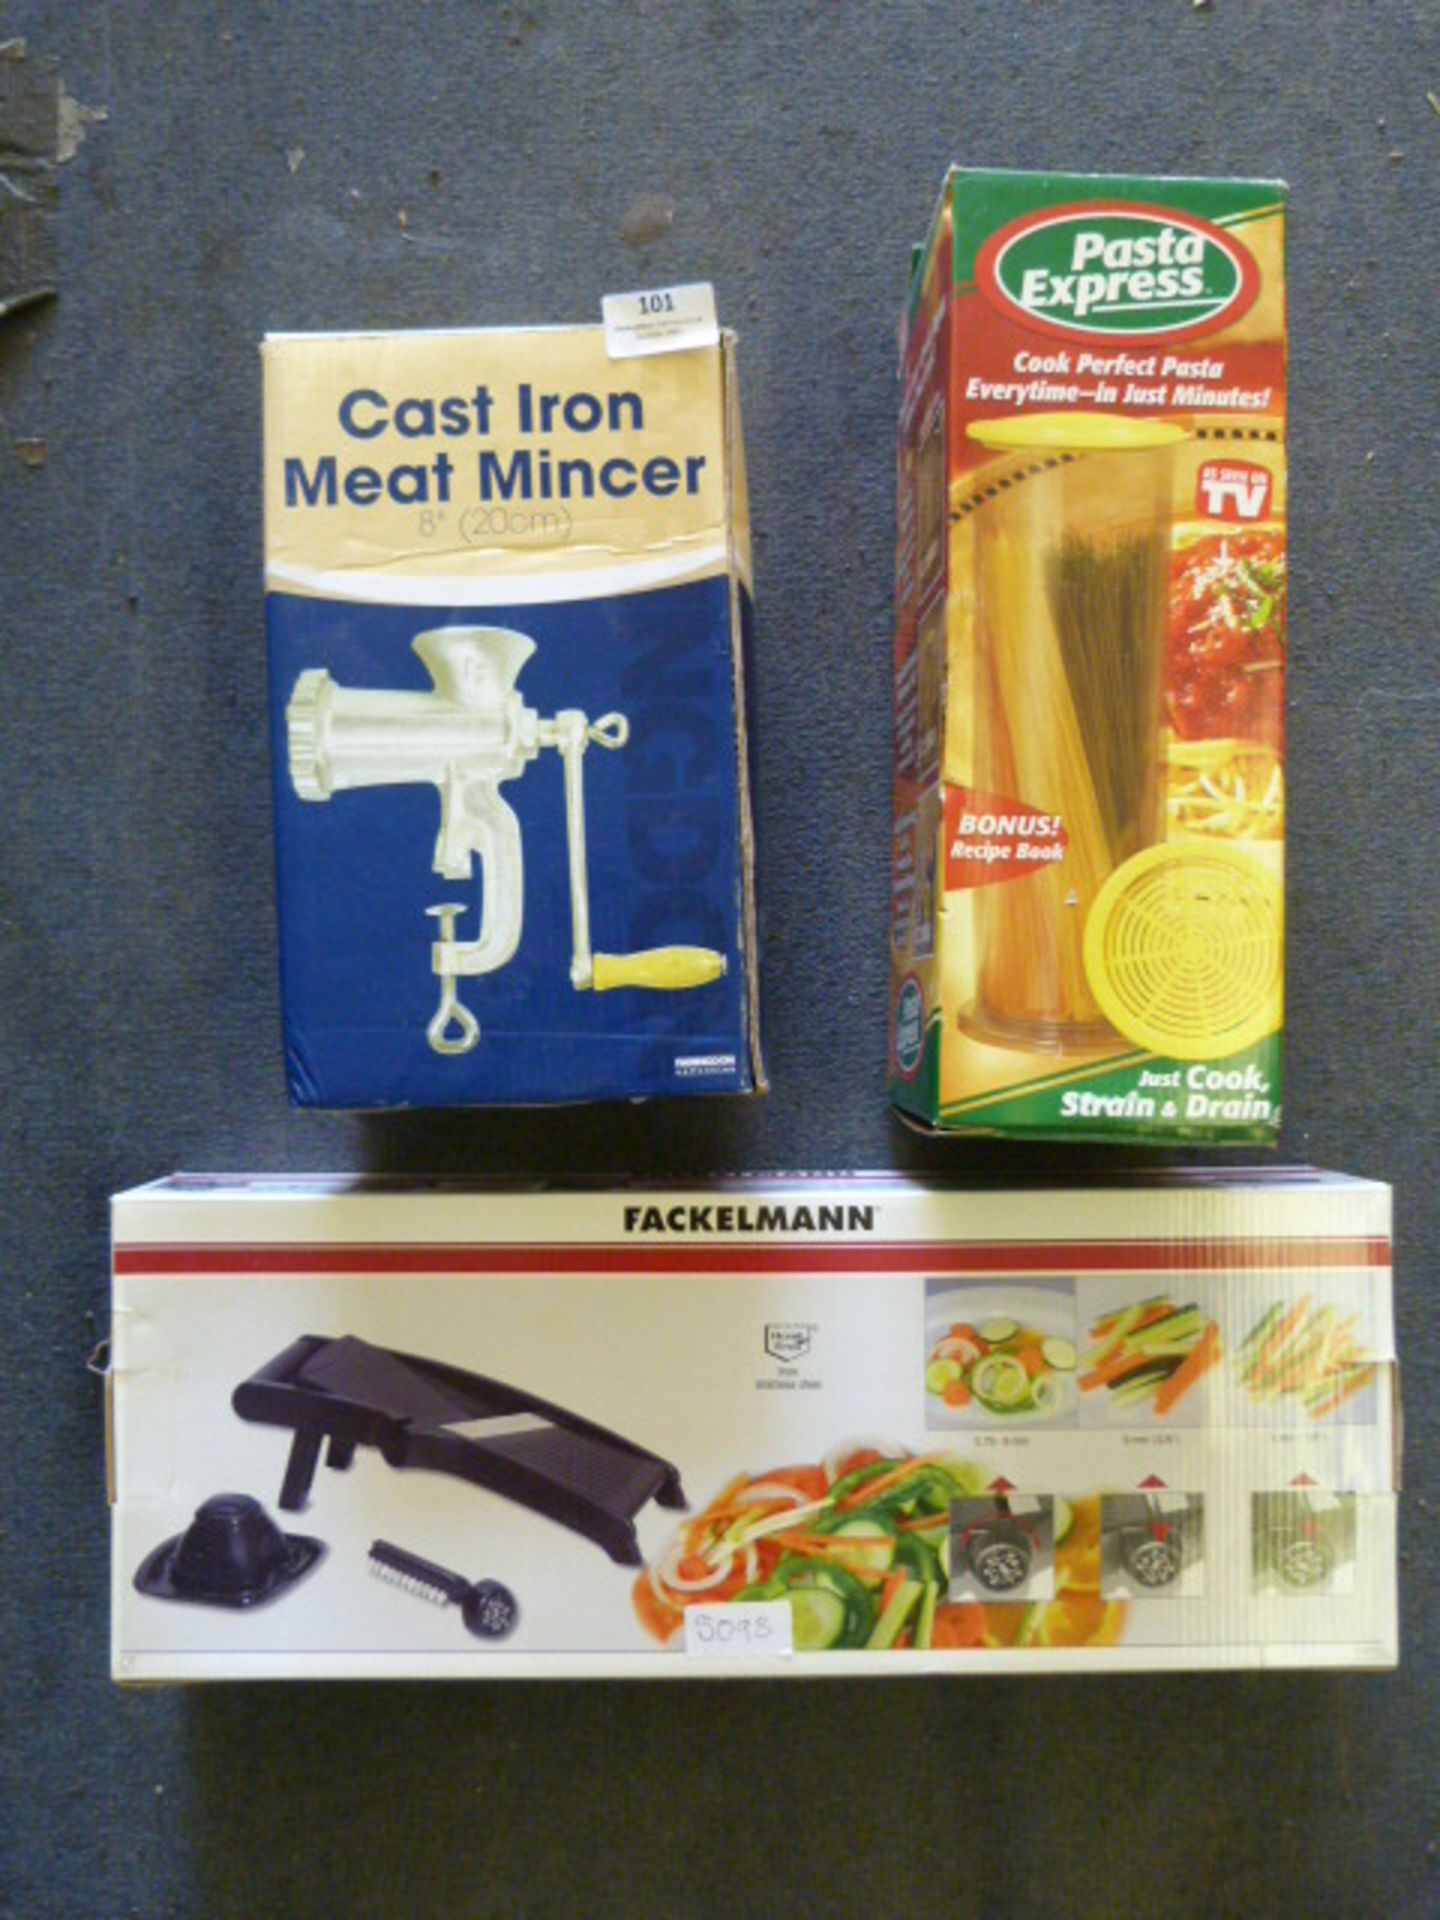 Meat Mincer, Pasta Express Cooker and a Food Slicer